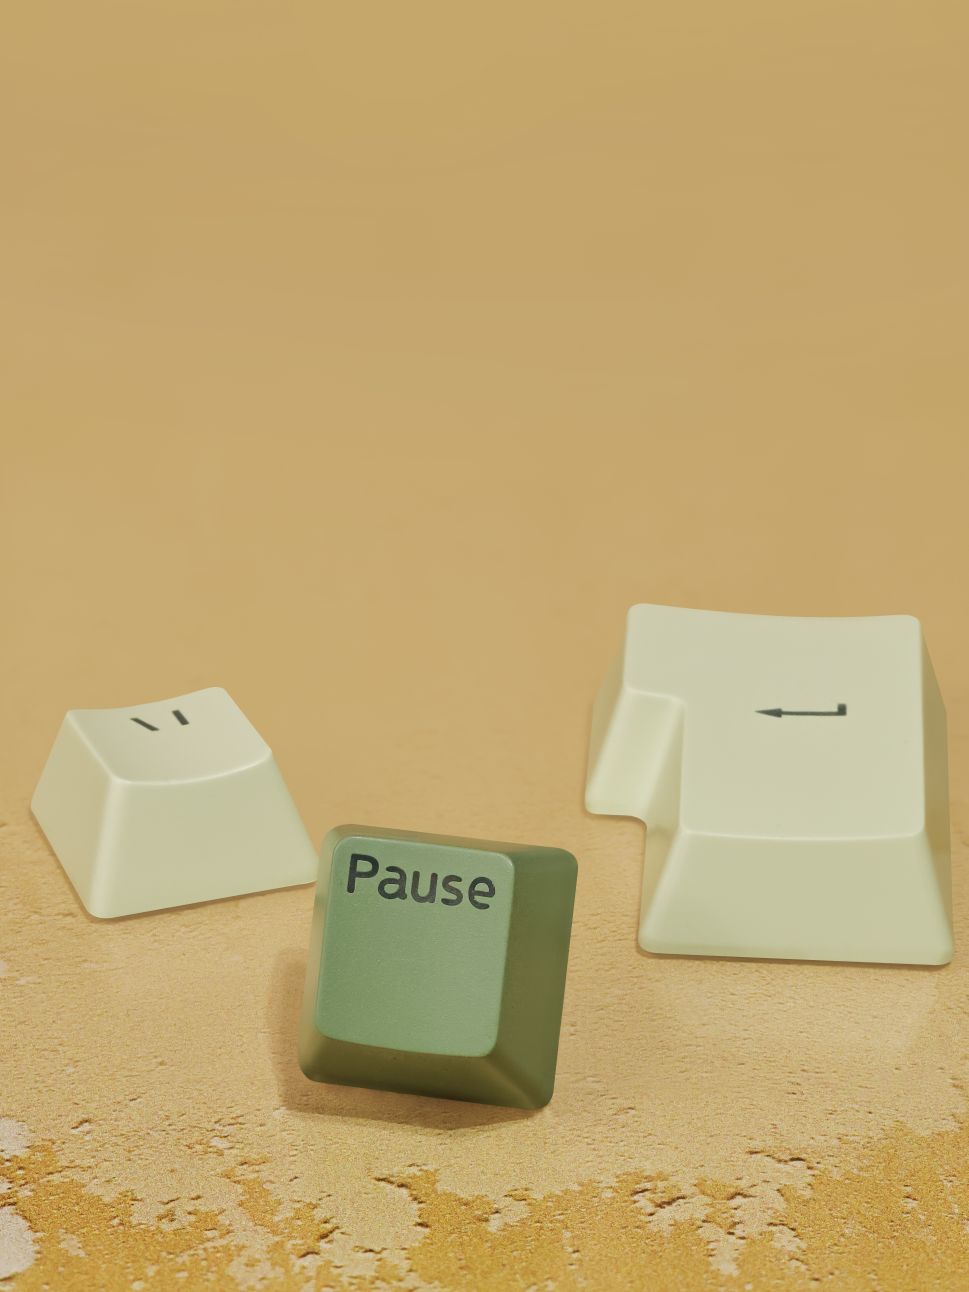 Computer keyboard pause key caps